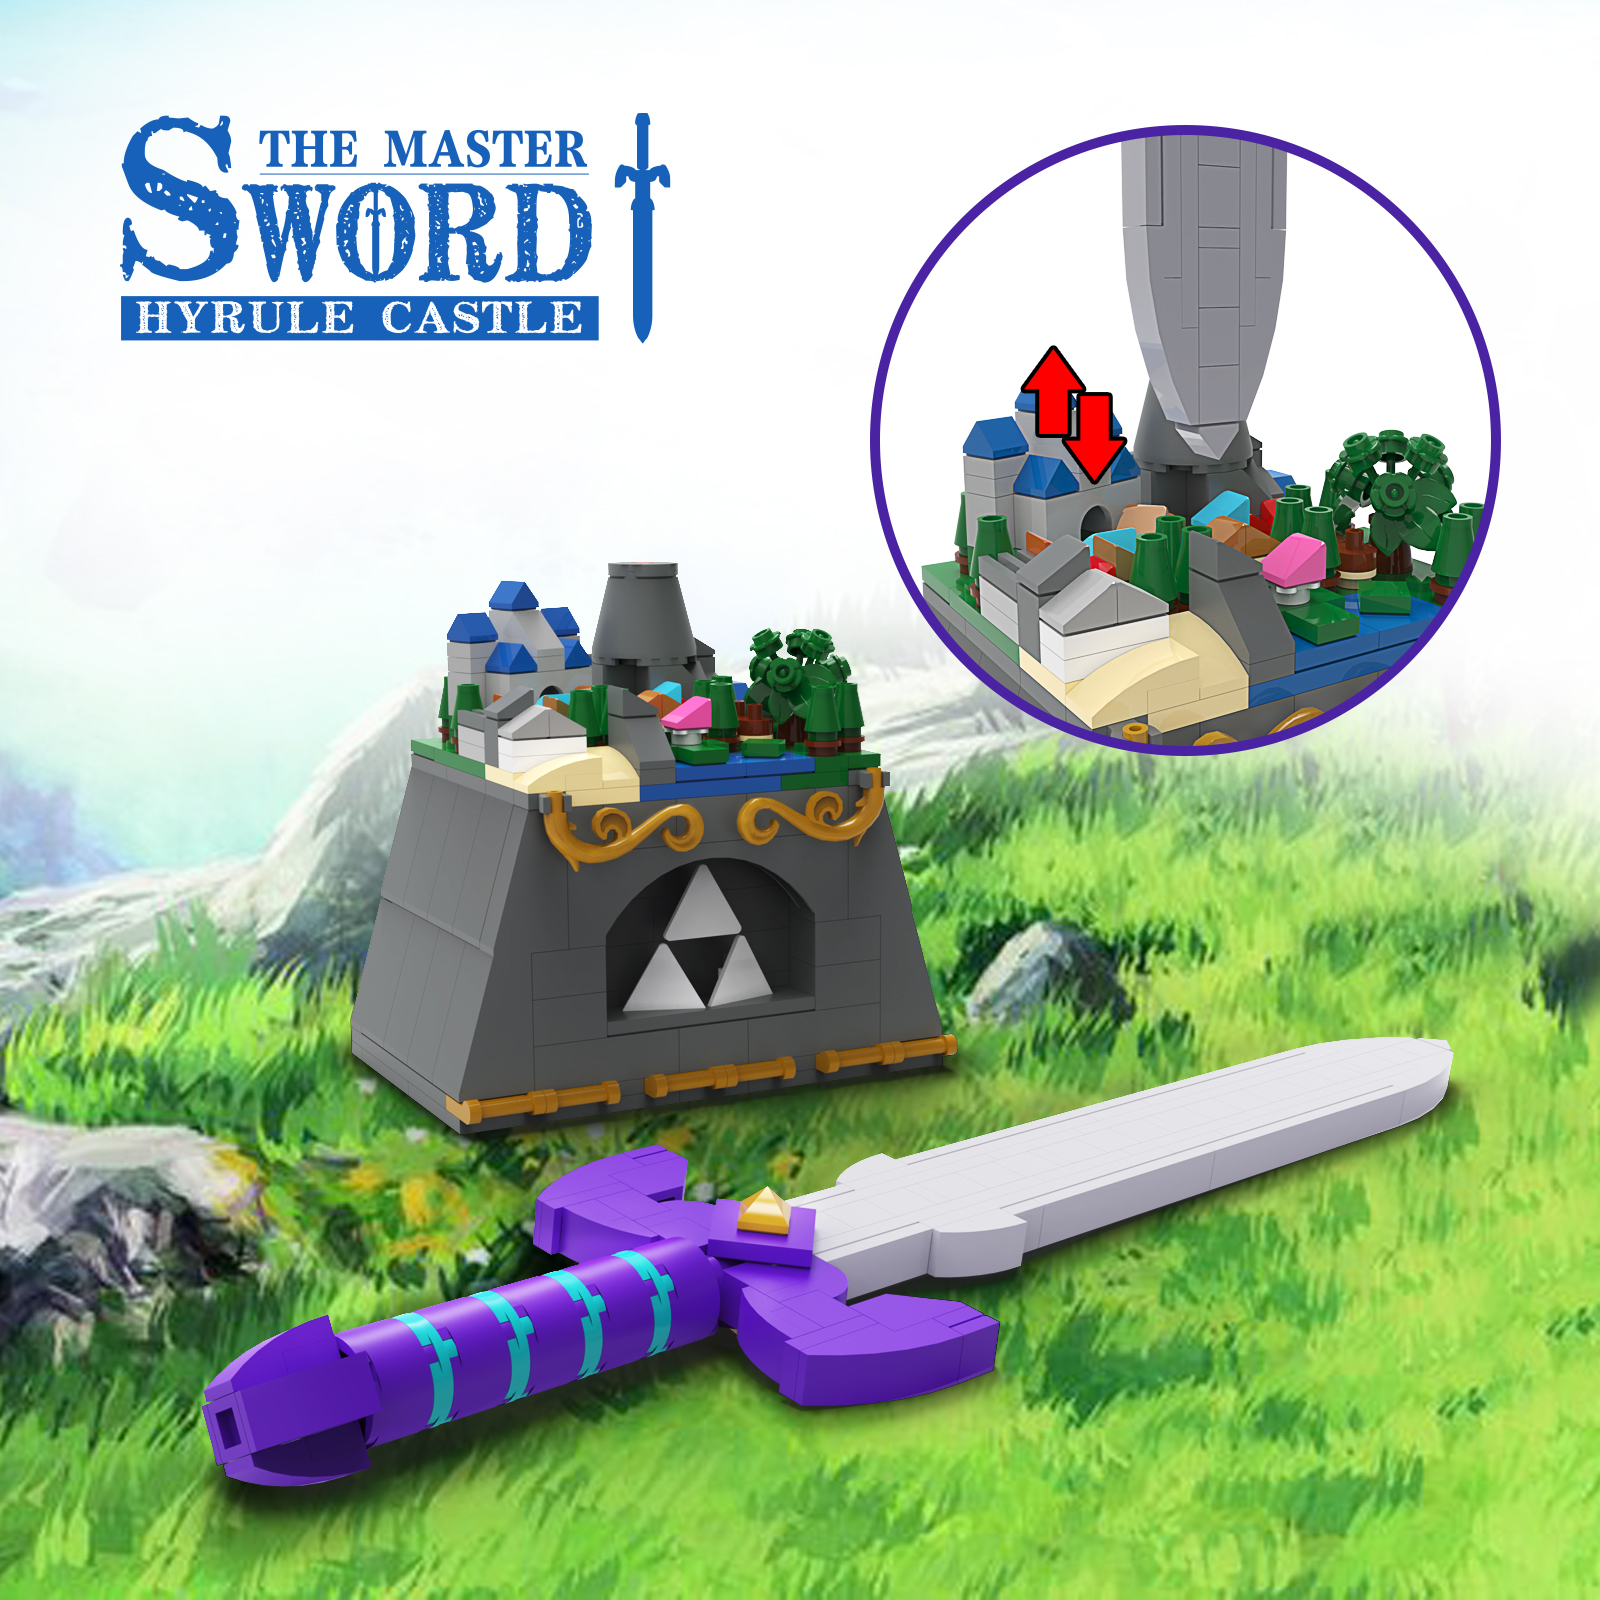 BuildMoc Breath Of The Wild The Master Sword Building Blocks Set For Zeldaed Hyrule Castle BOTW - Zelda Plush